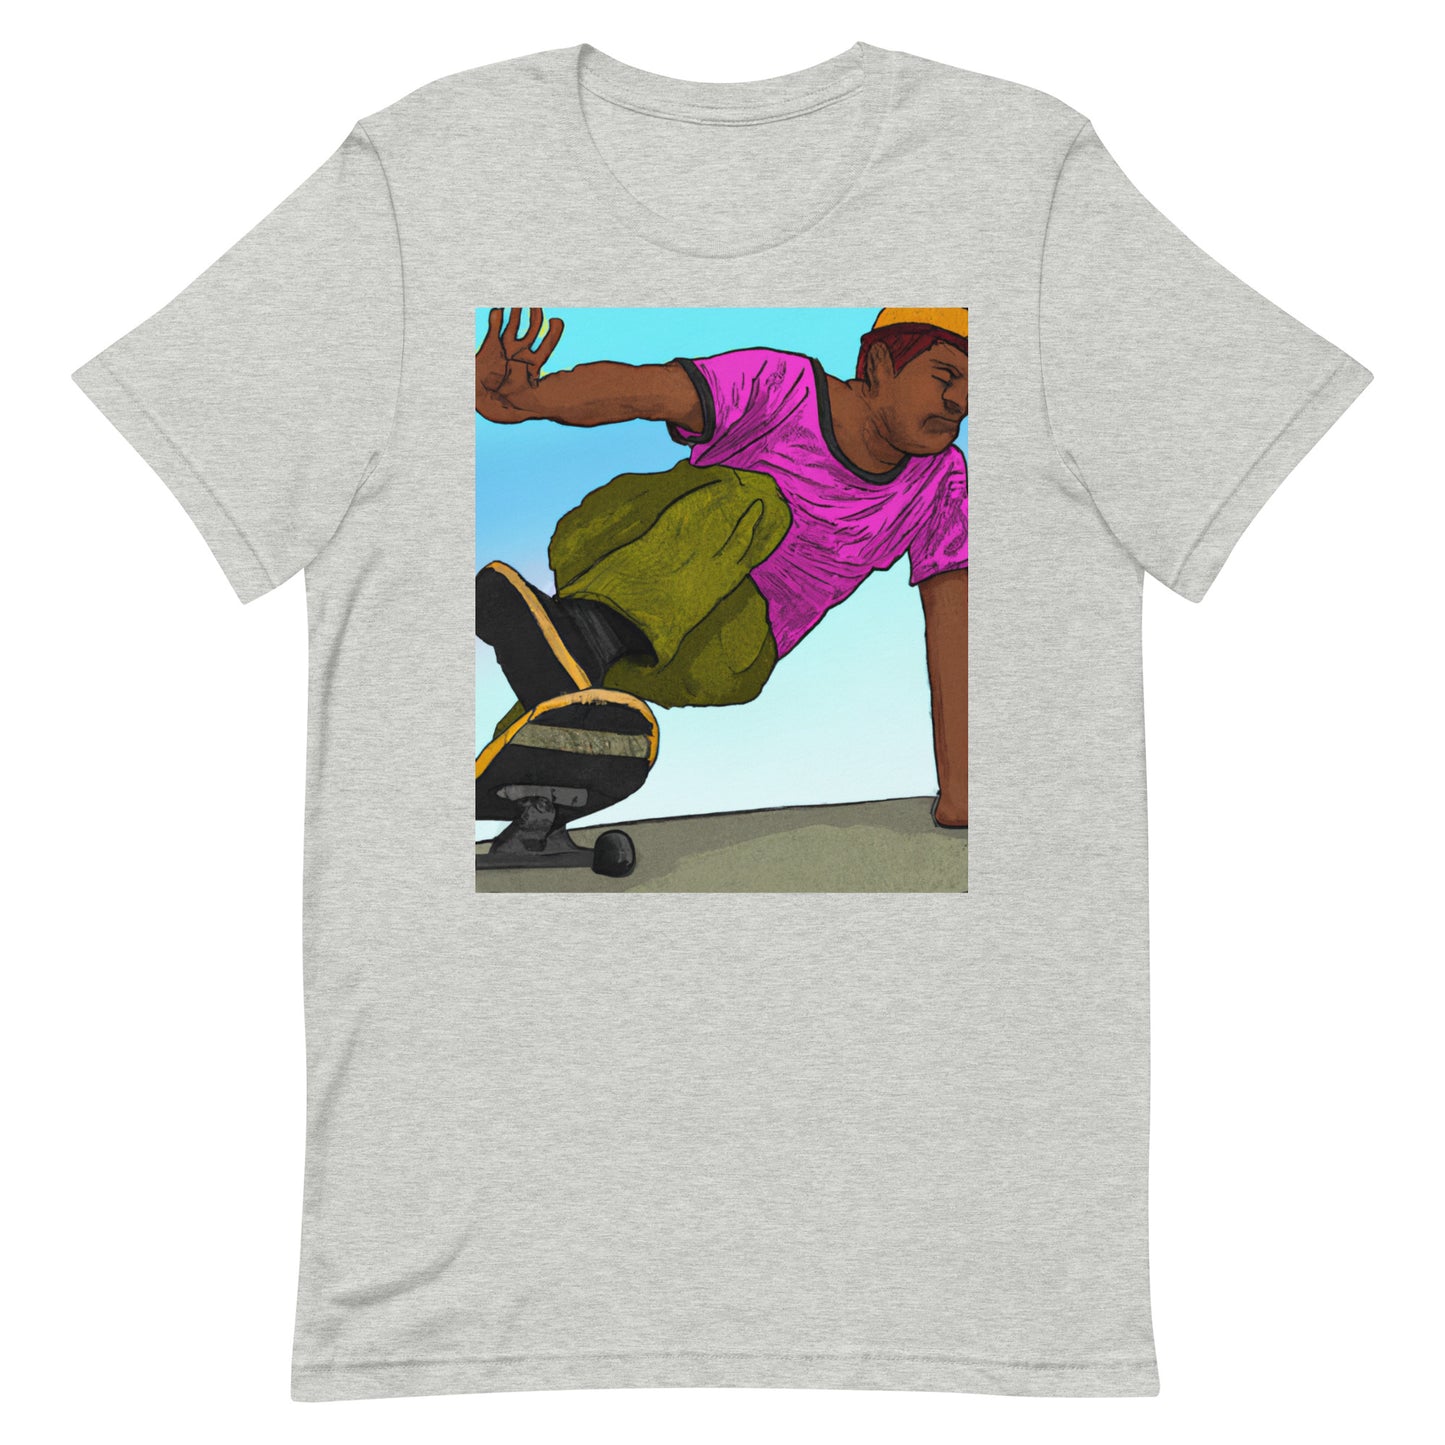 City Skate Project Bertsliding T-shirt